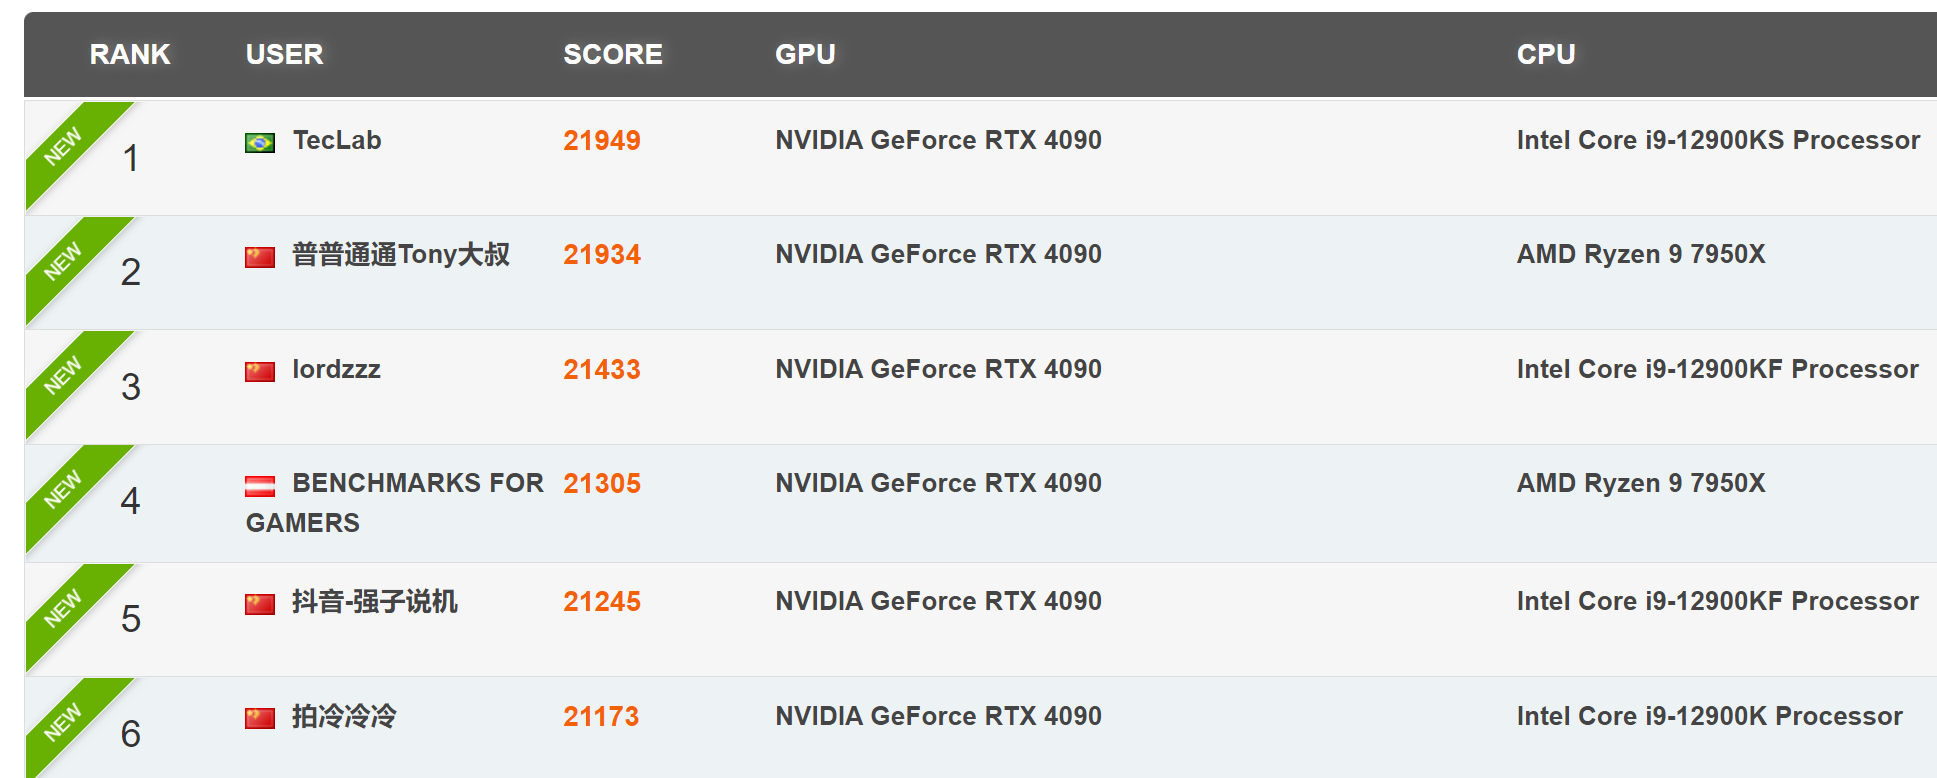 rtx4090 score 2 ทุบสถิติโลก GALAX TecLab OC team โอเวอร์คล๊อกการ์ดจอ Nvidia GeForce RTX 4090 ความเร็วสูงสุด 3.45 GHz ด้วย Ln2 